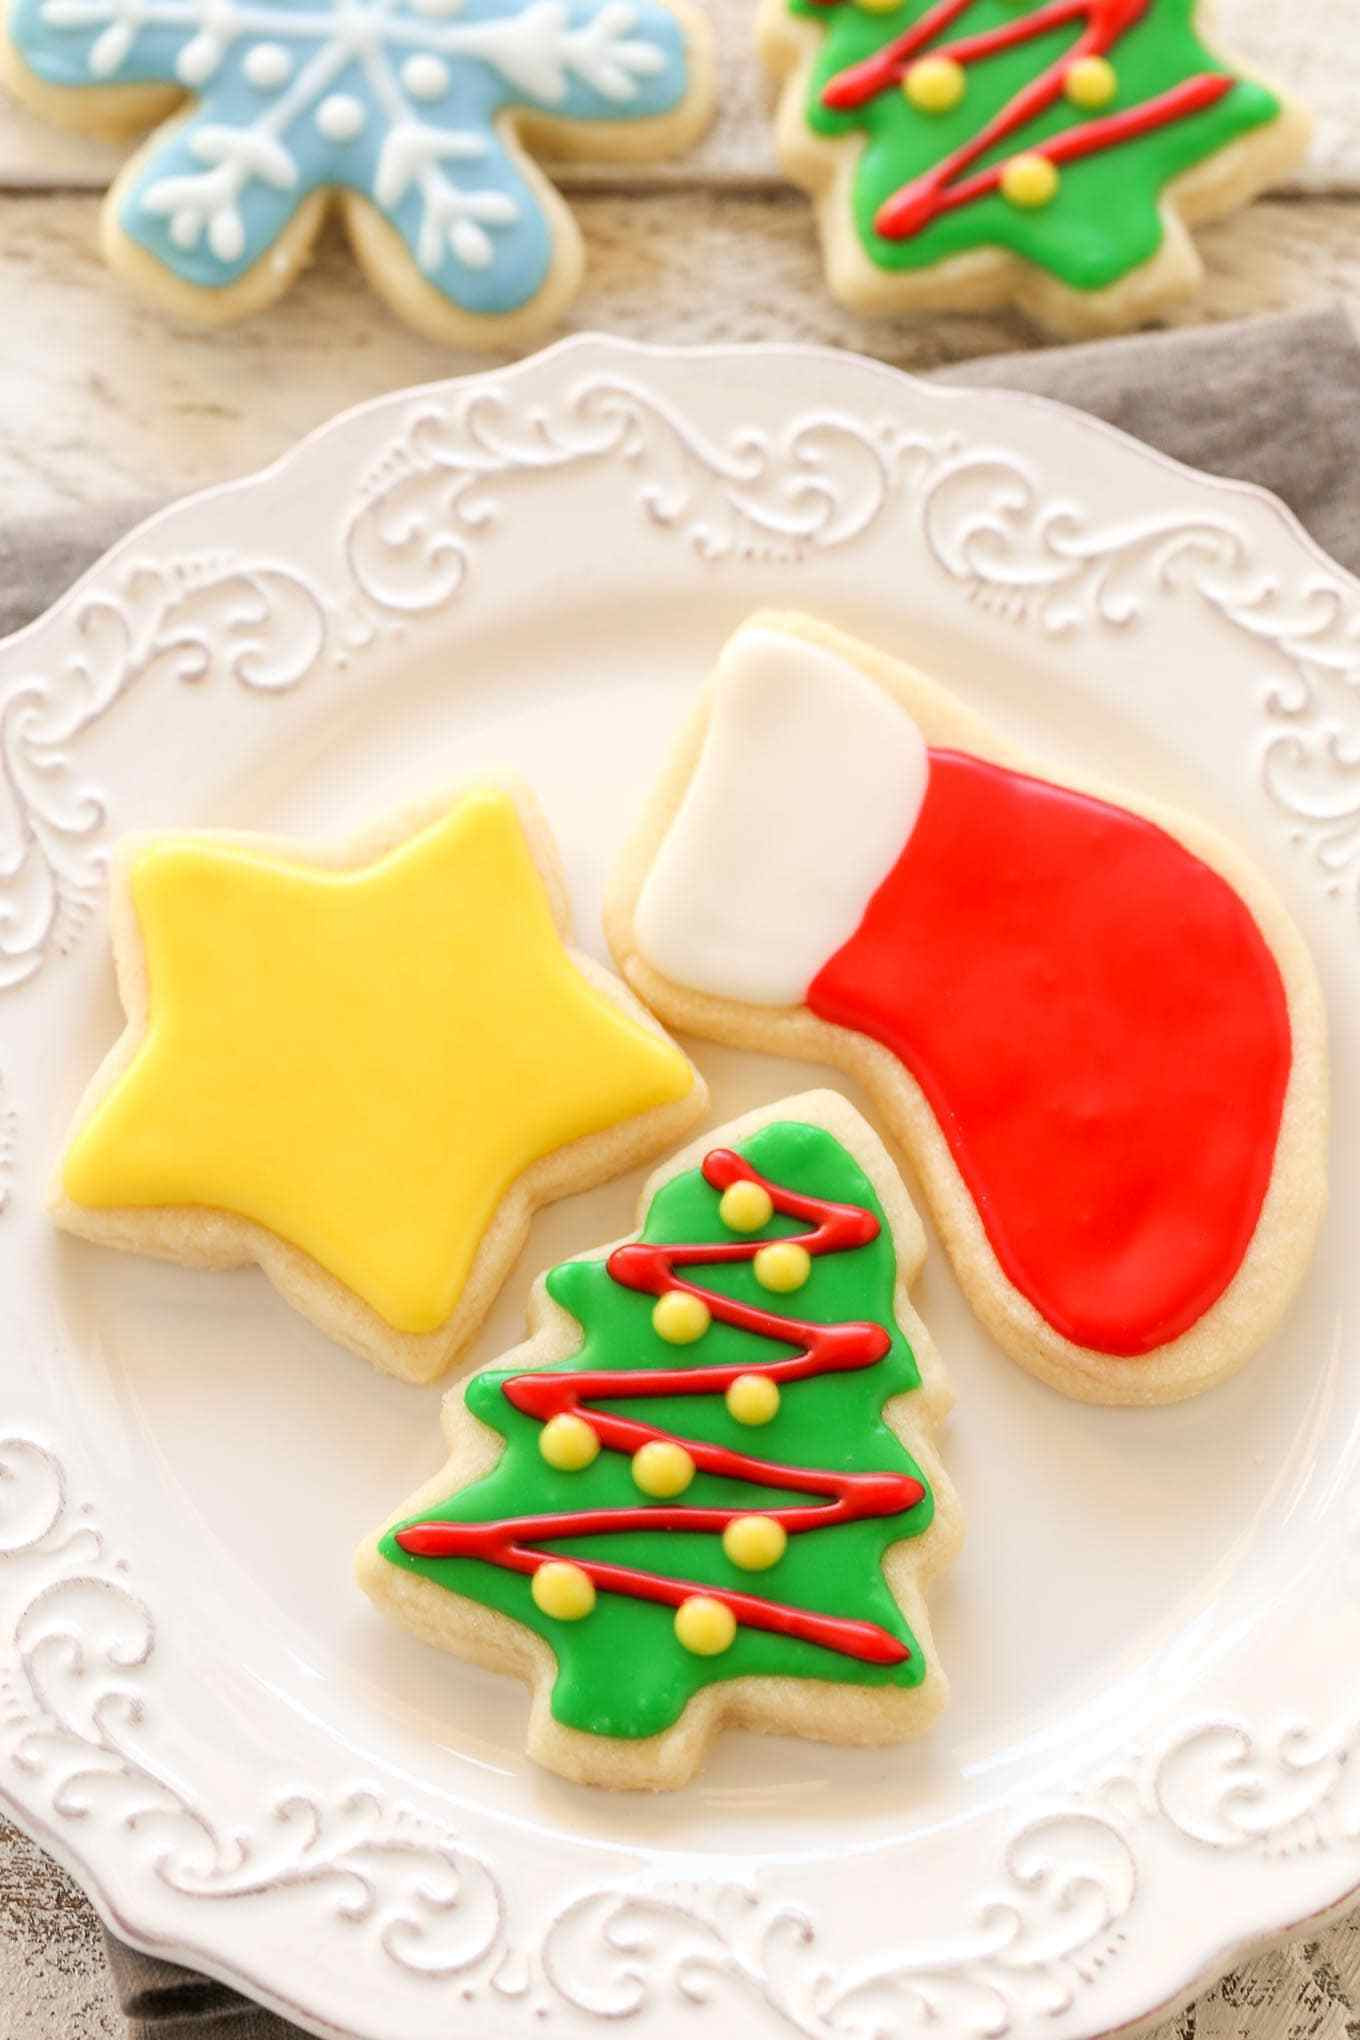 Christmas Cutout Sugar Cookies Recipe
 Soft Christmas Cut Out Sugar Cookies Live Well Bake ten